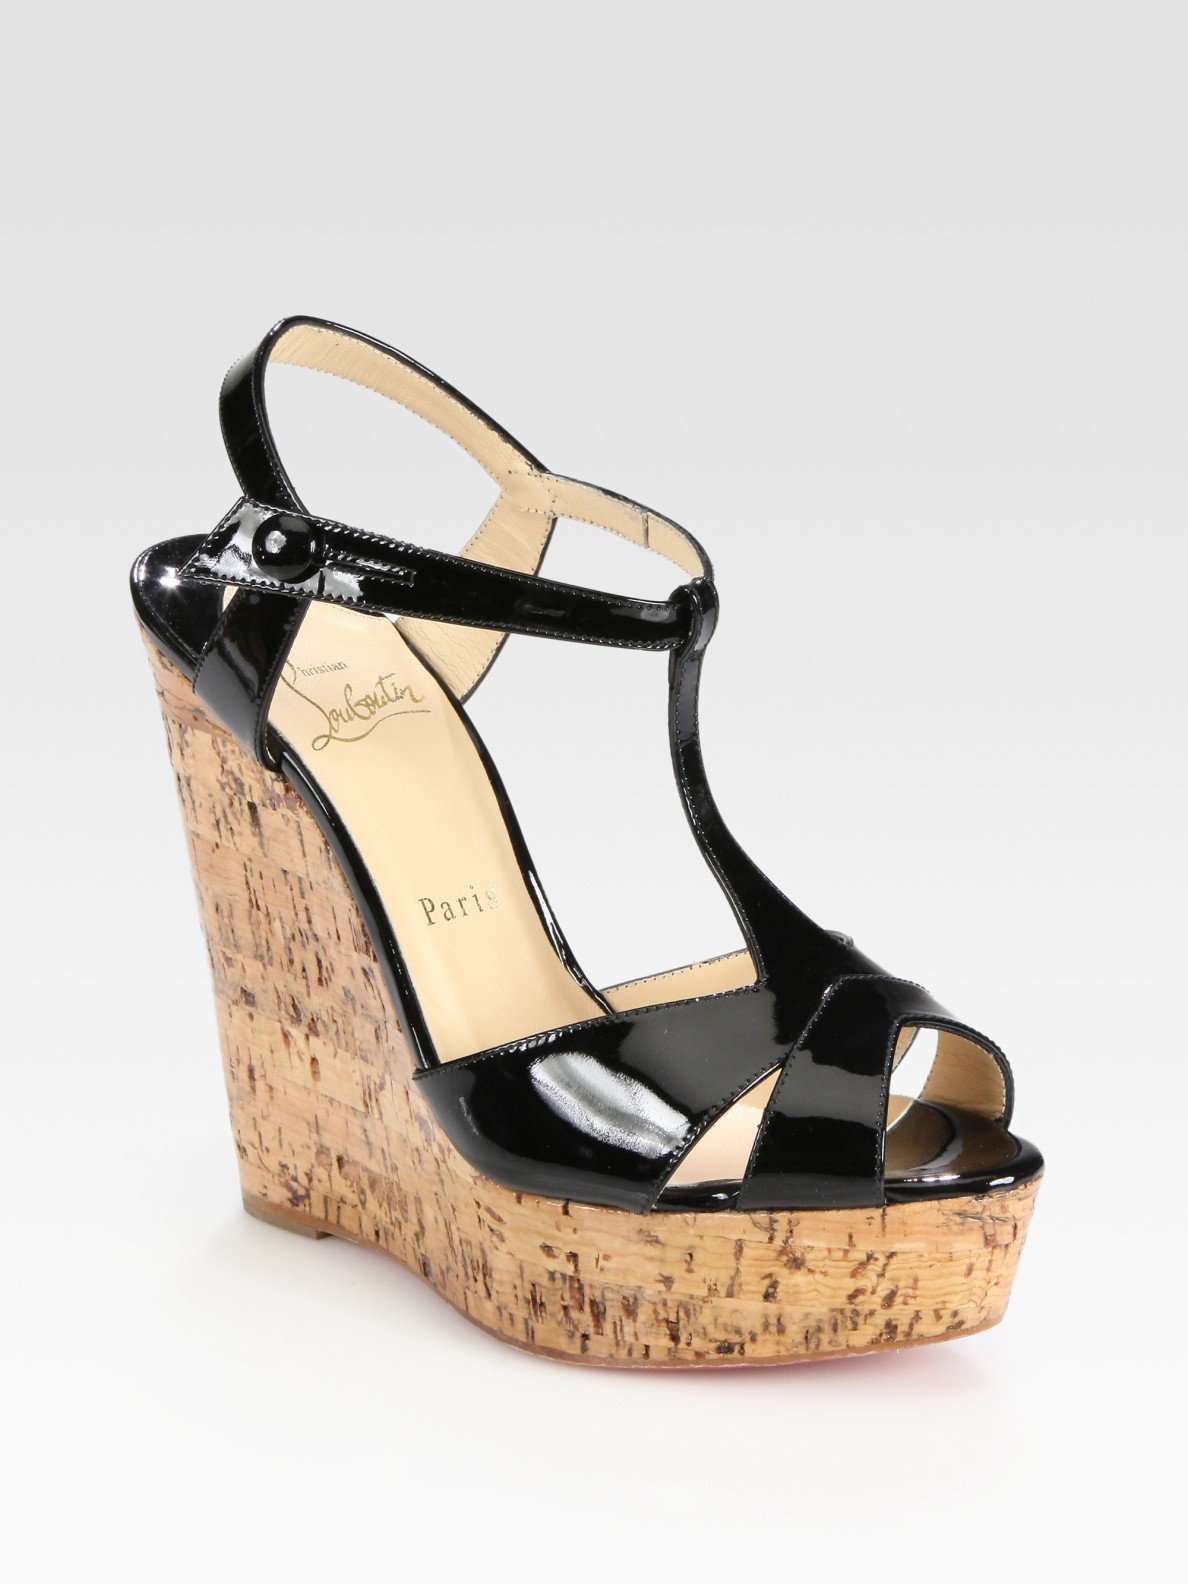 Artesur ? christian louboutin sandals Black patent leather cork heels